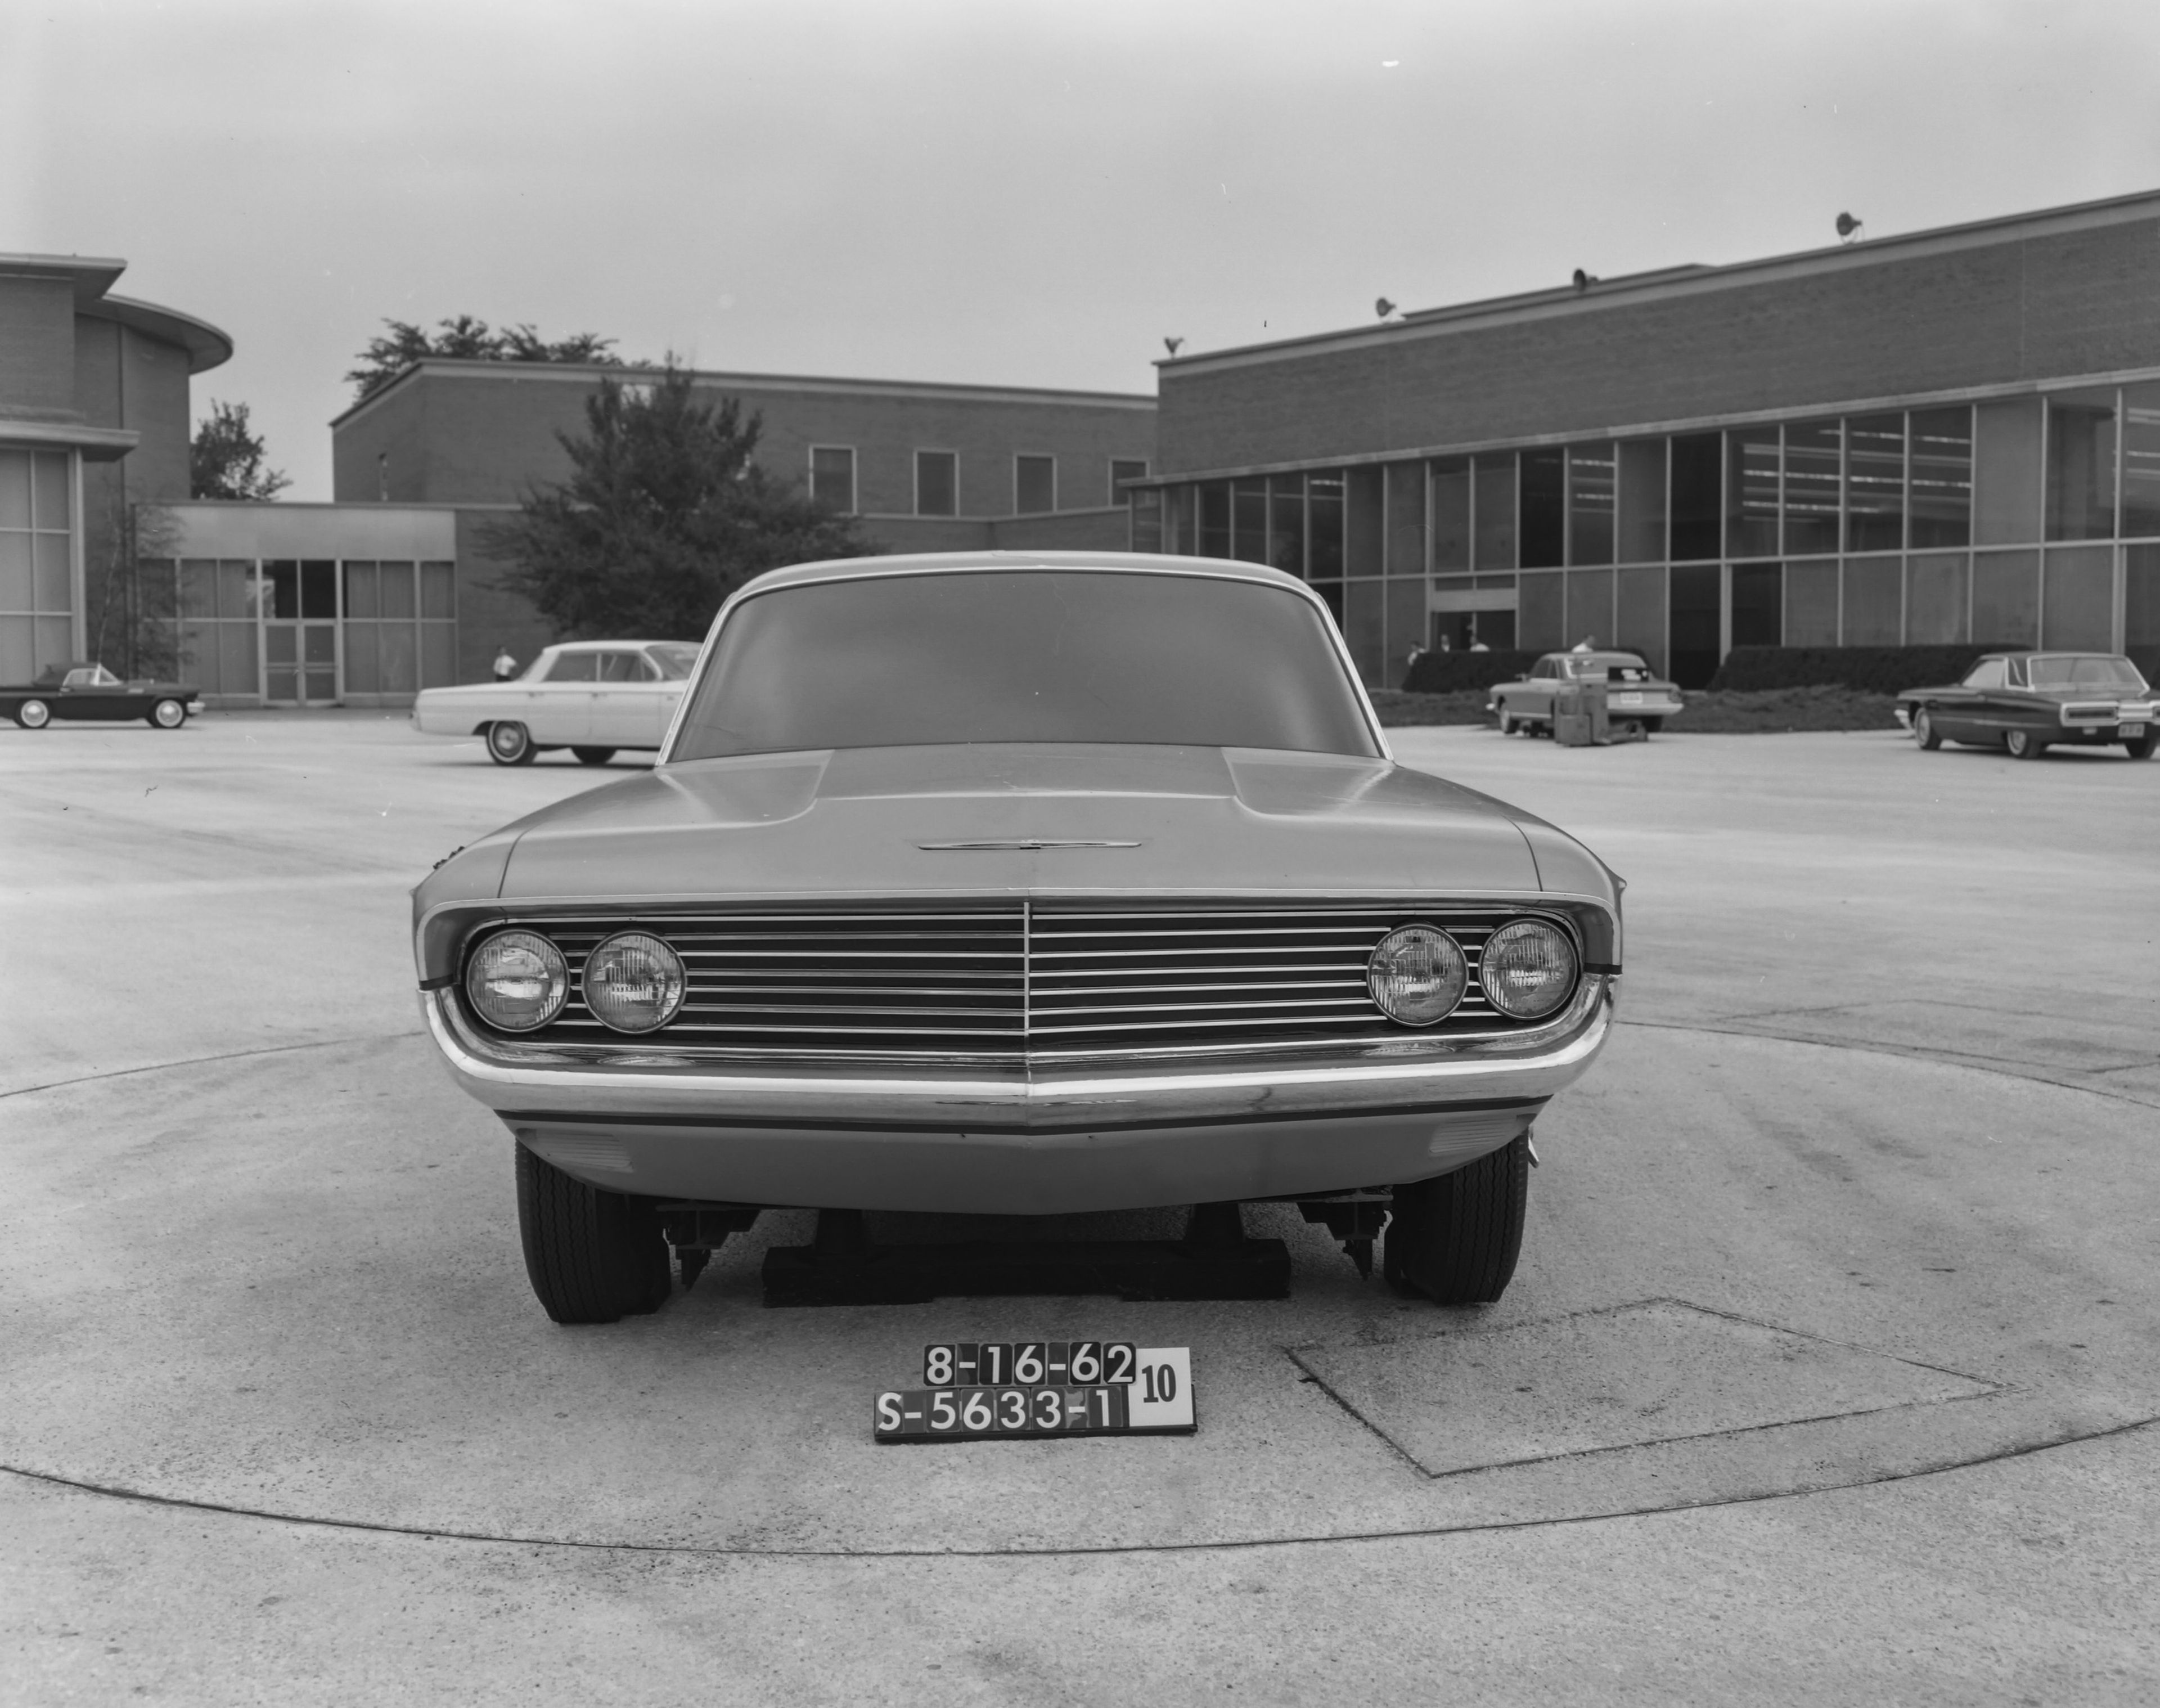 Ford Mustang (Prototipos de Advanced Products Studio en 1962)